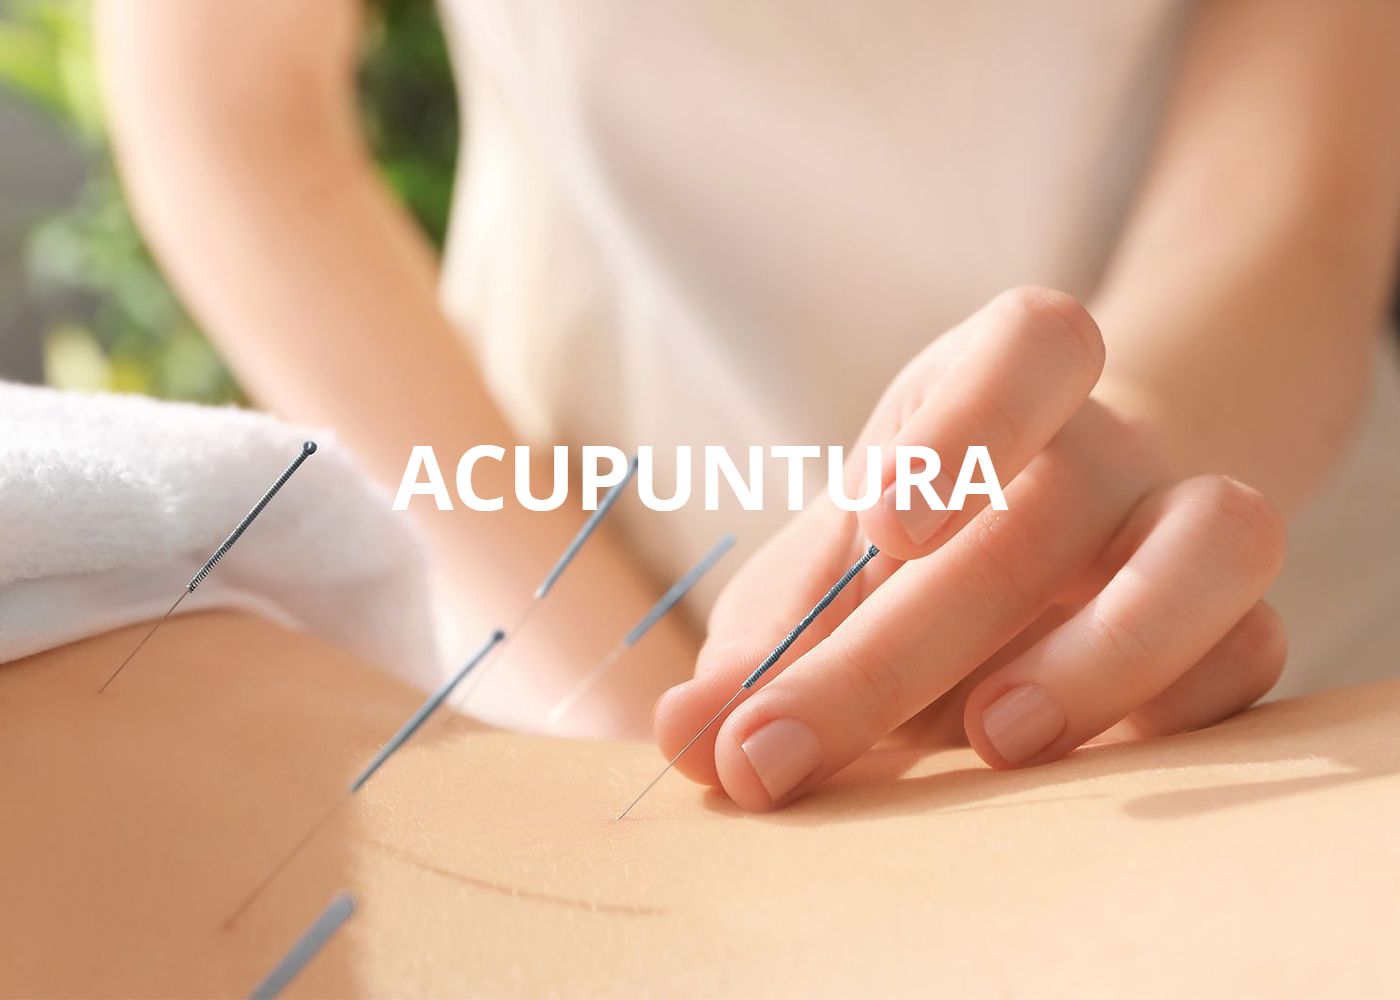 <img src="agujas" alt="acupuntura" />